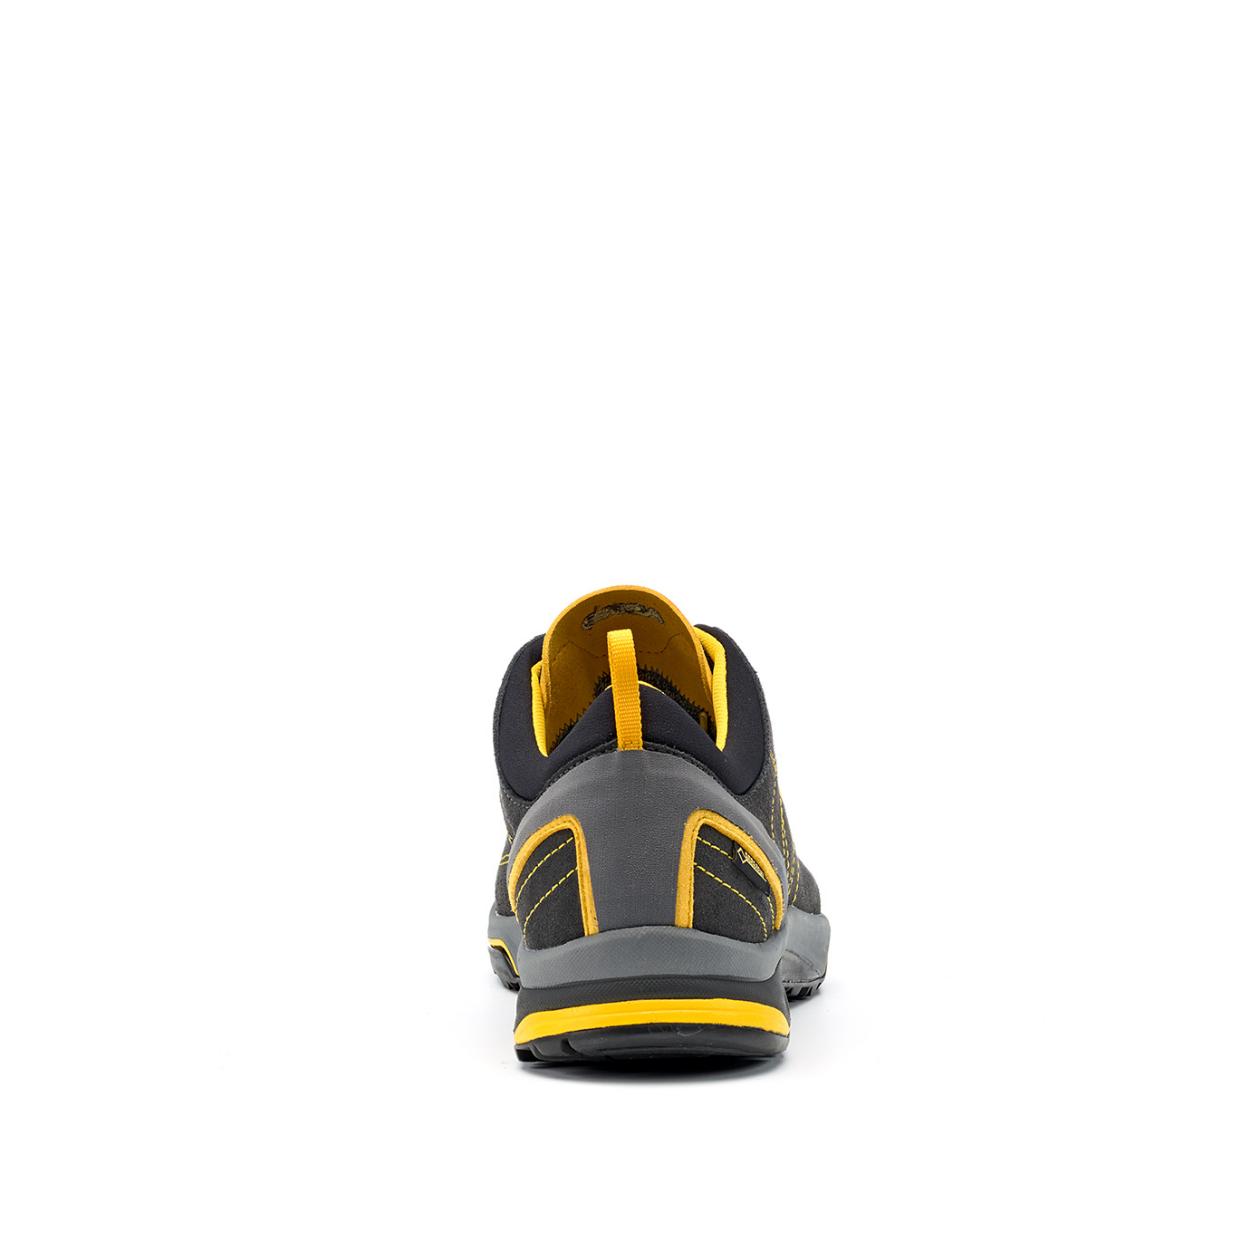 Ботинки для хайкинга (низкие) Asolo Nucleon MM Graphite /Yellow